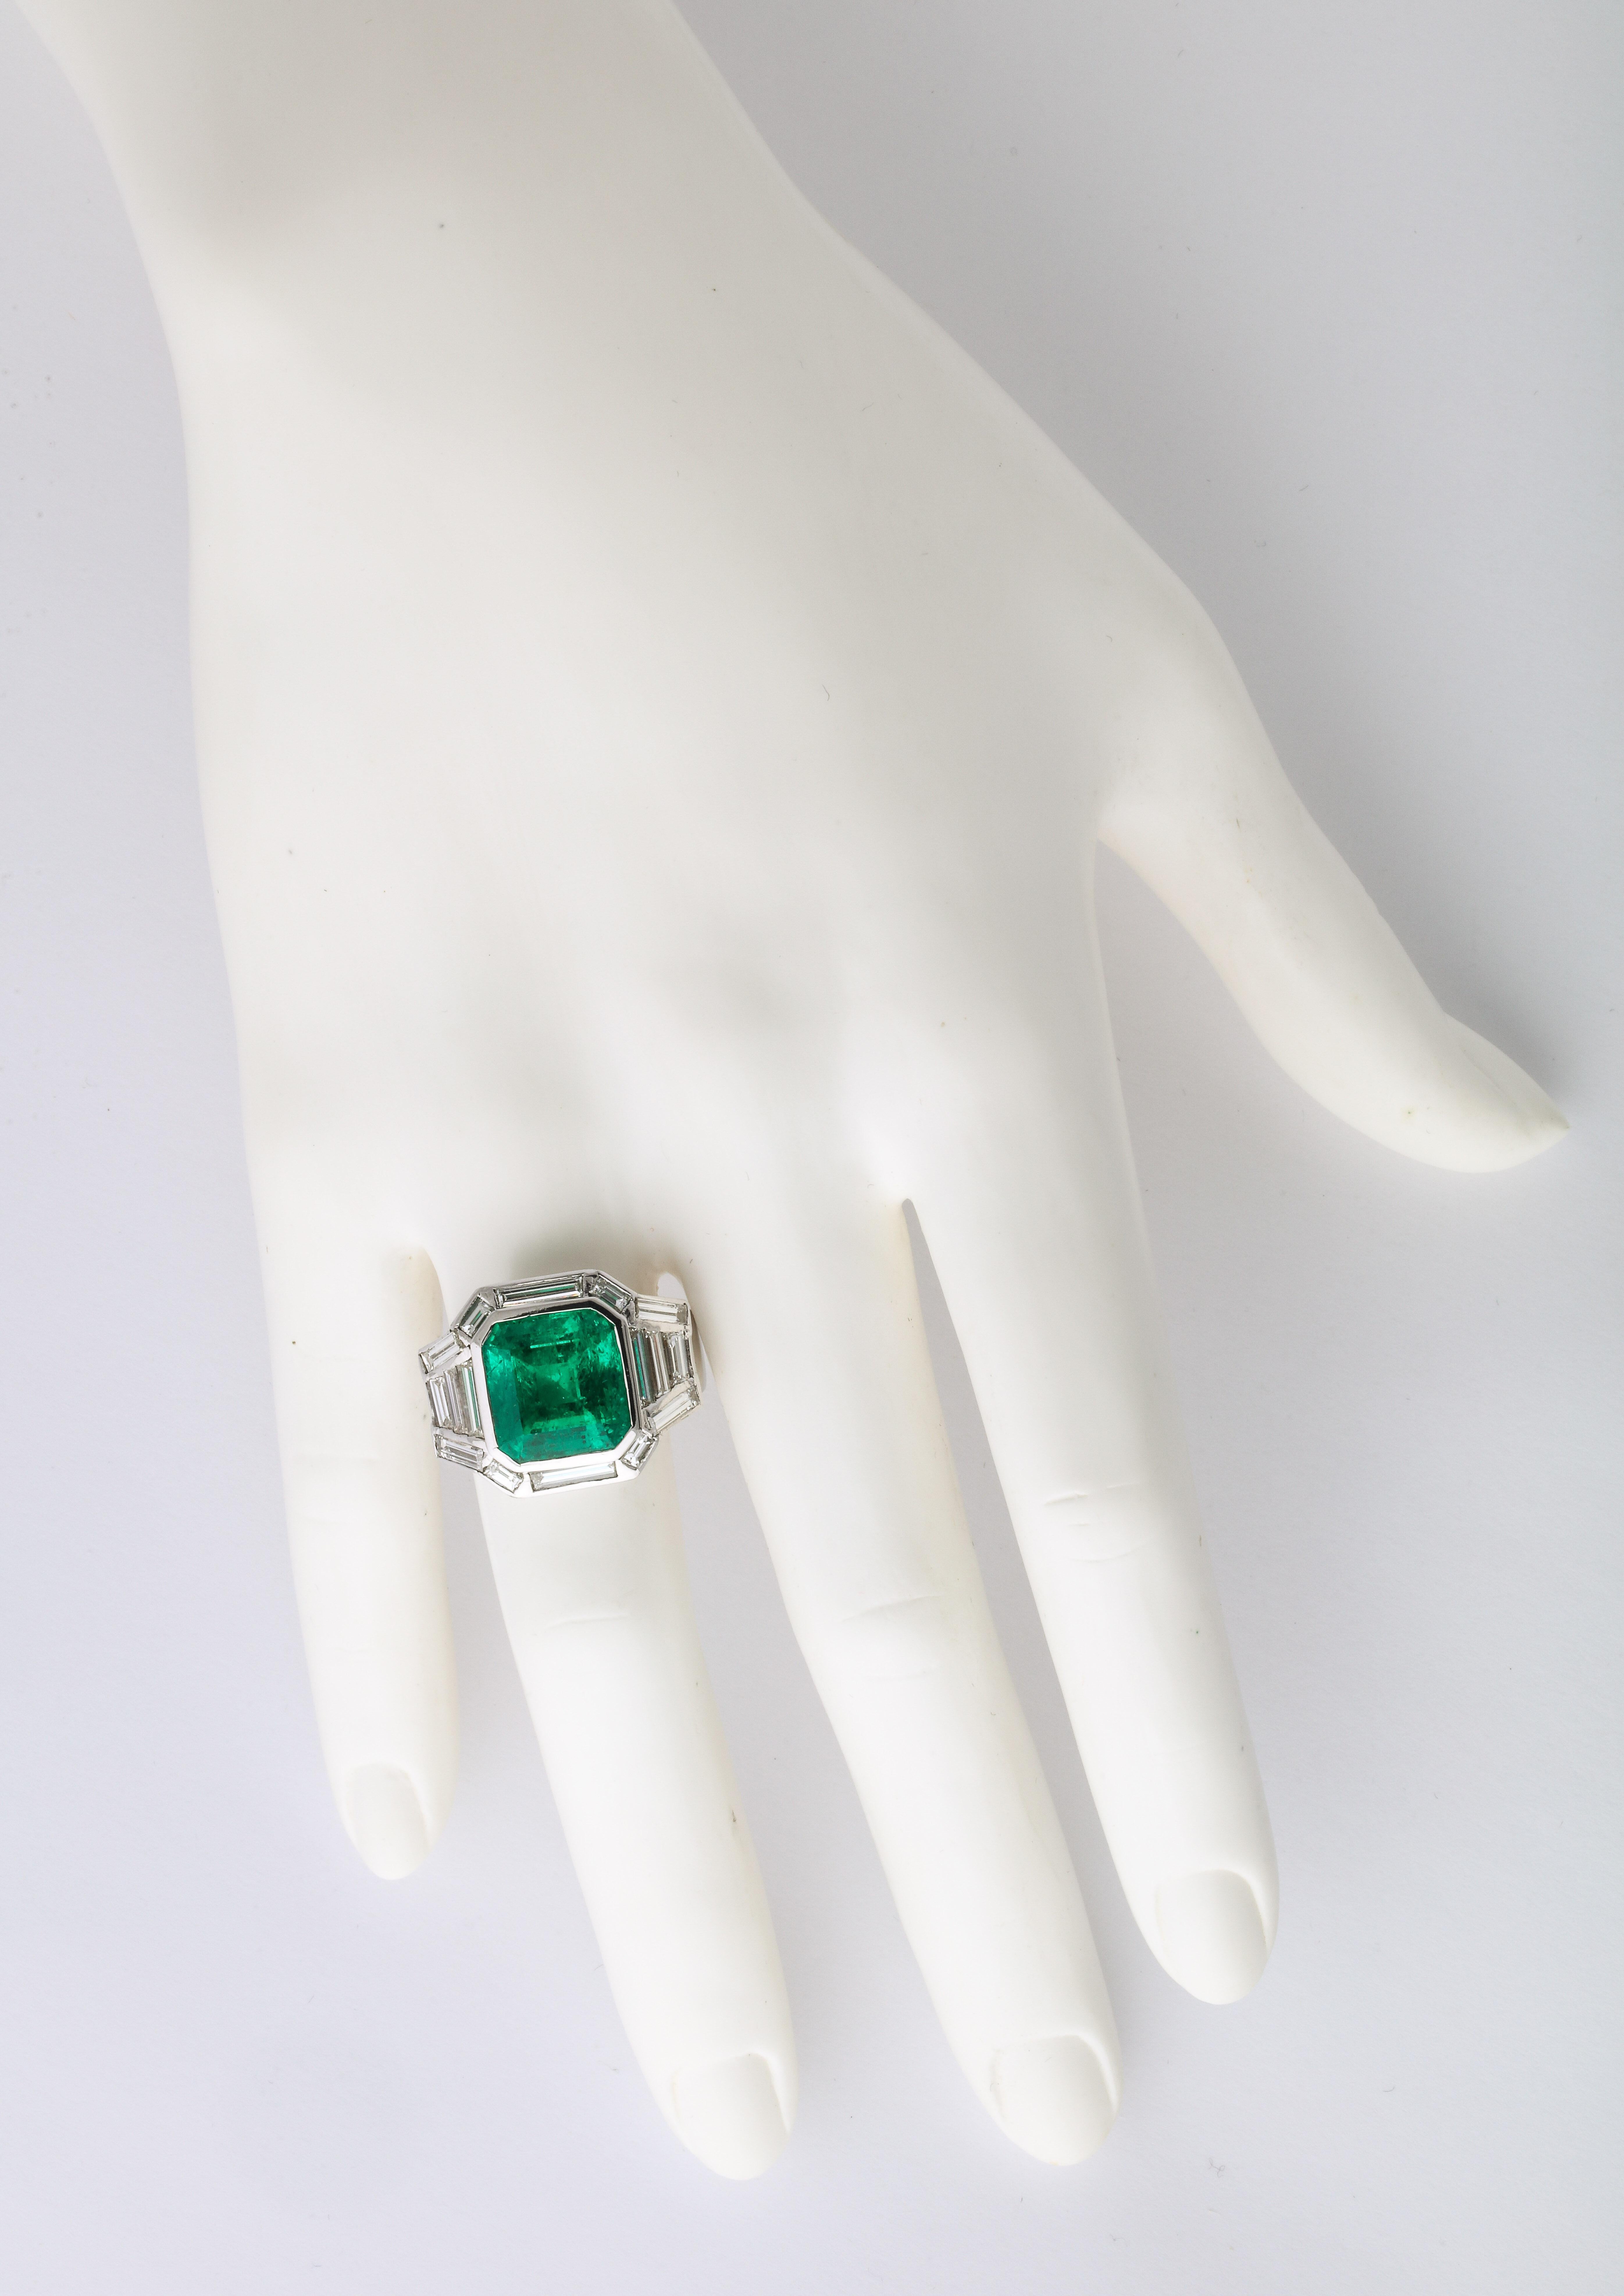 Emerald Cut Certified 9 Carat Colombian Emerald and Diamond Italian Ring